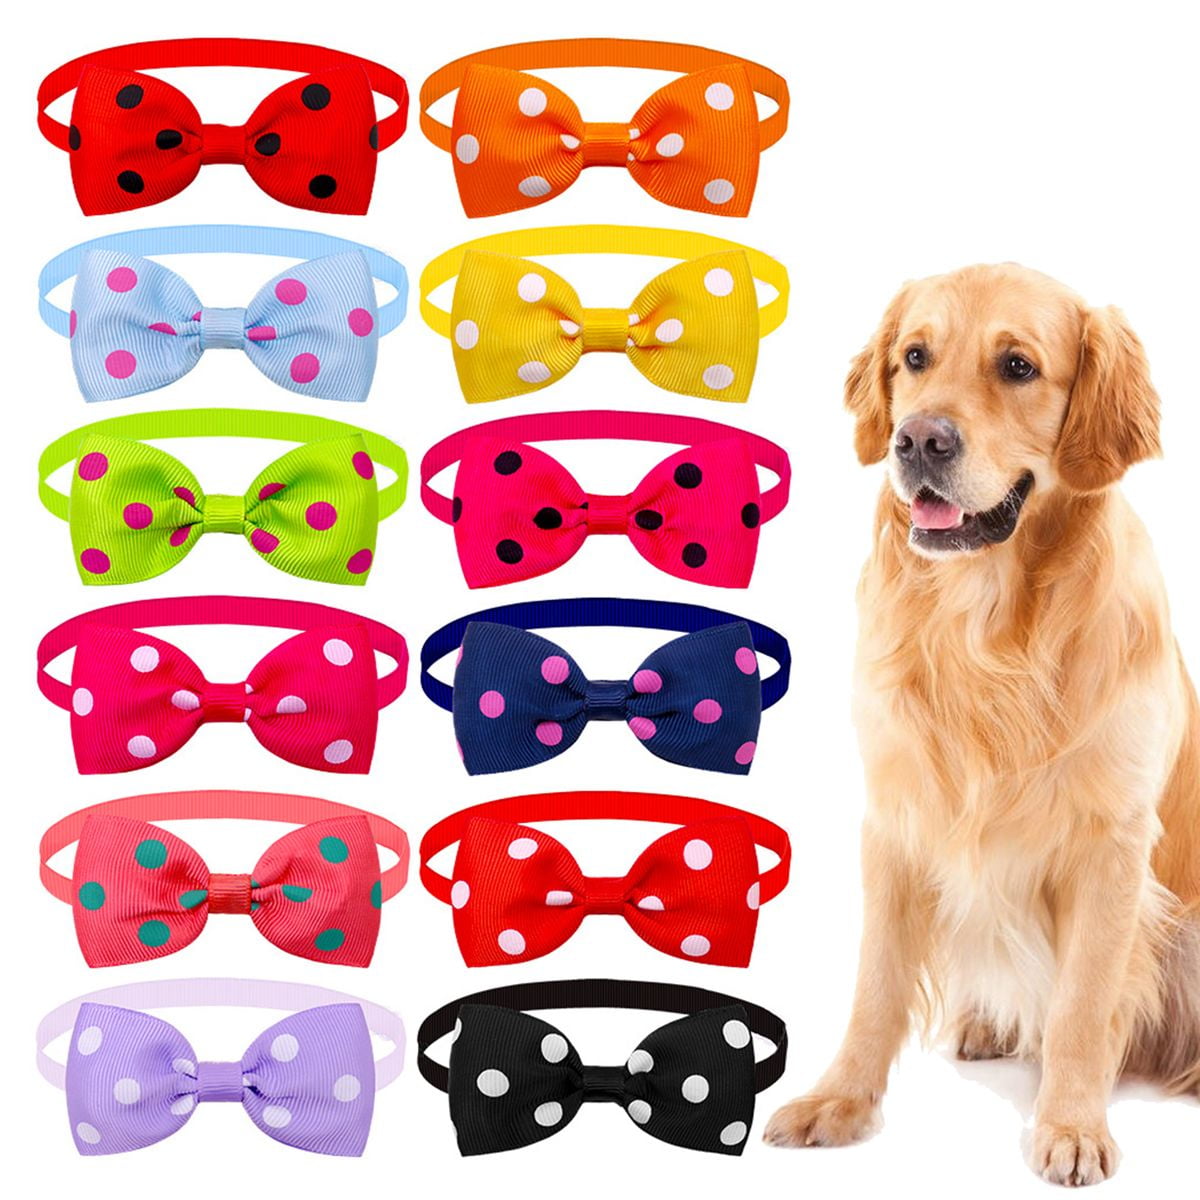 Puppy collar accessories Pet bow tie Polkadot pattern Luxury Navy Blue Polkadot dog bow tie